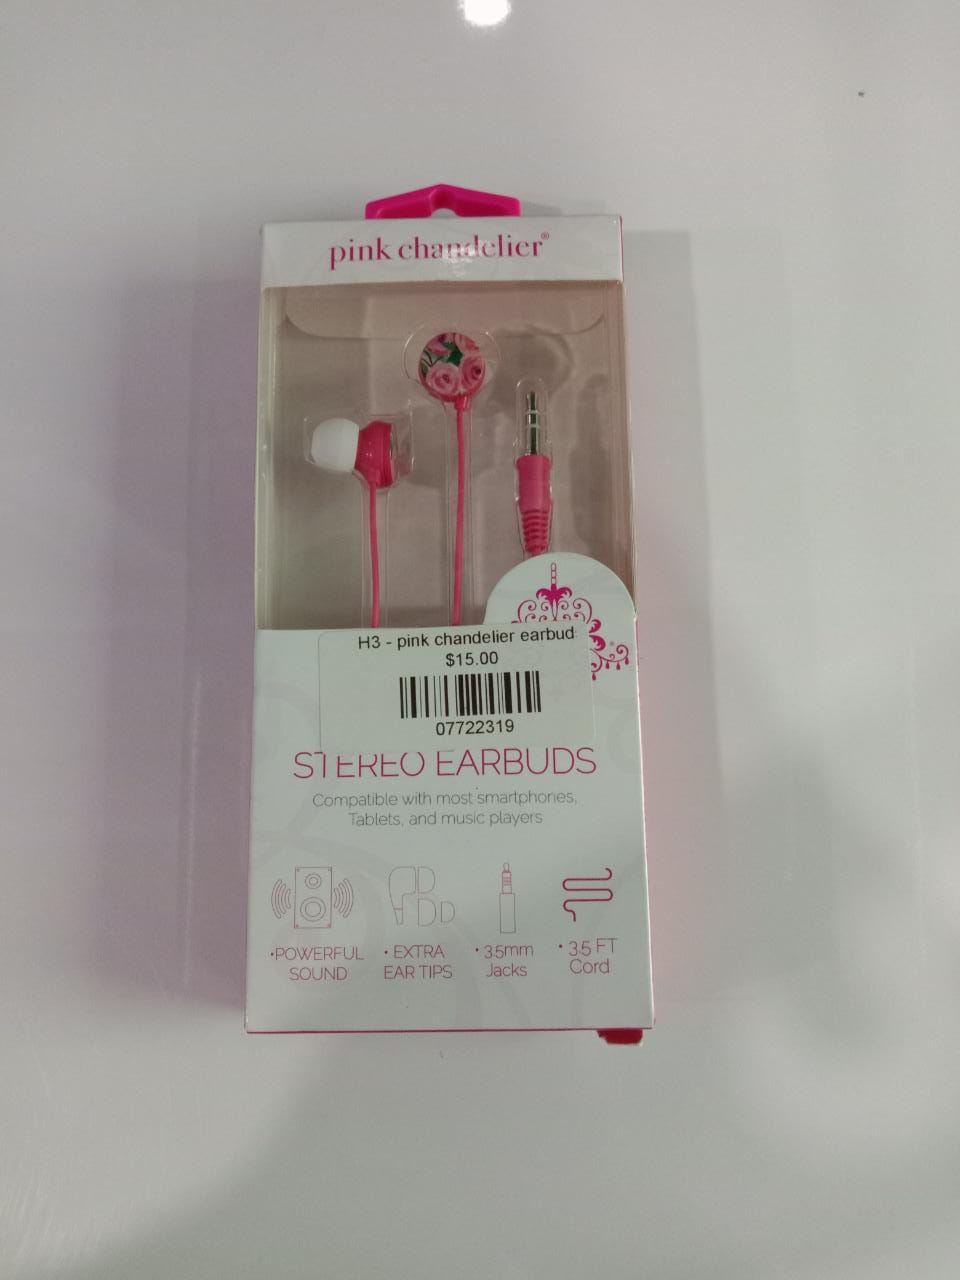 H3 - pink chandelier earbuds